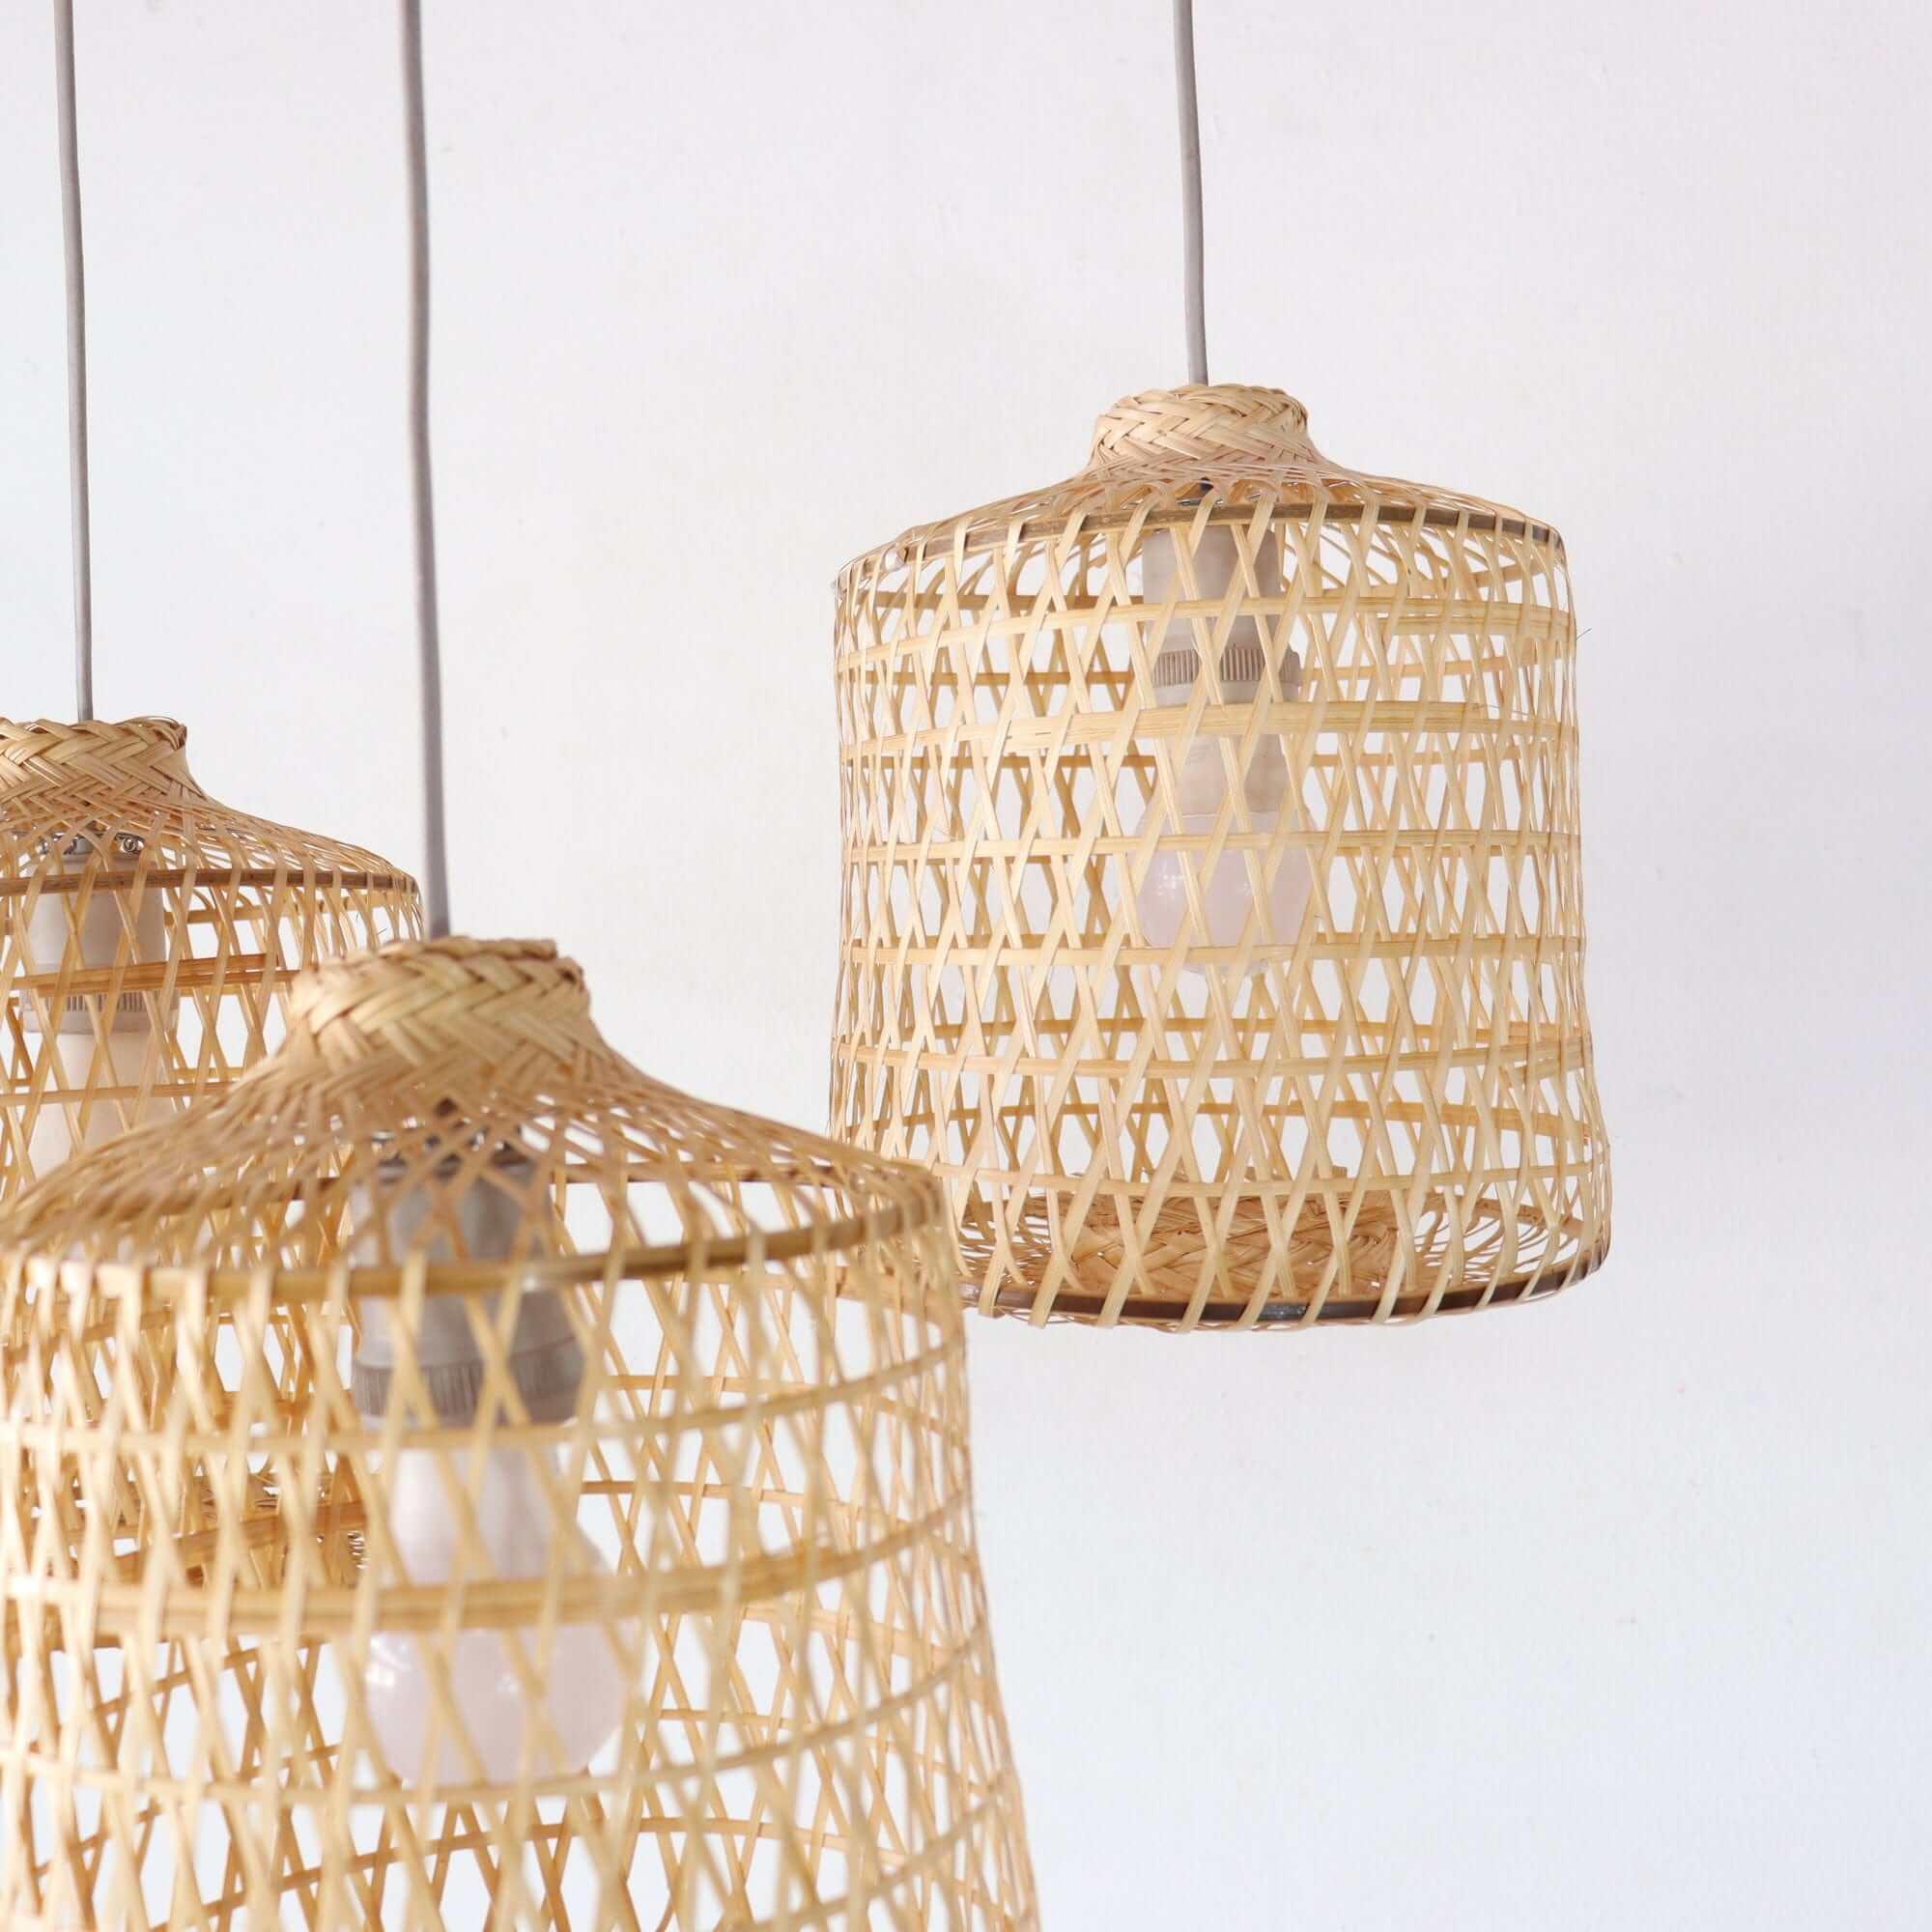 VAREE - Bamboo pendant light